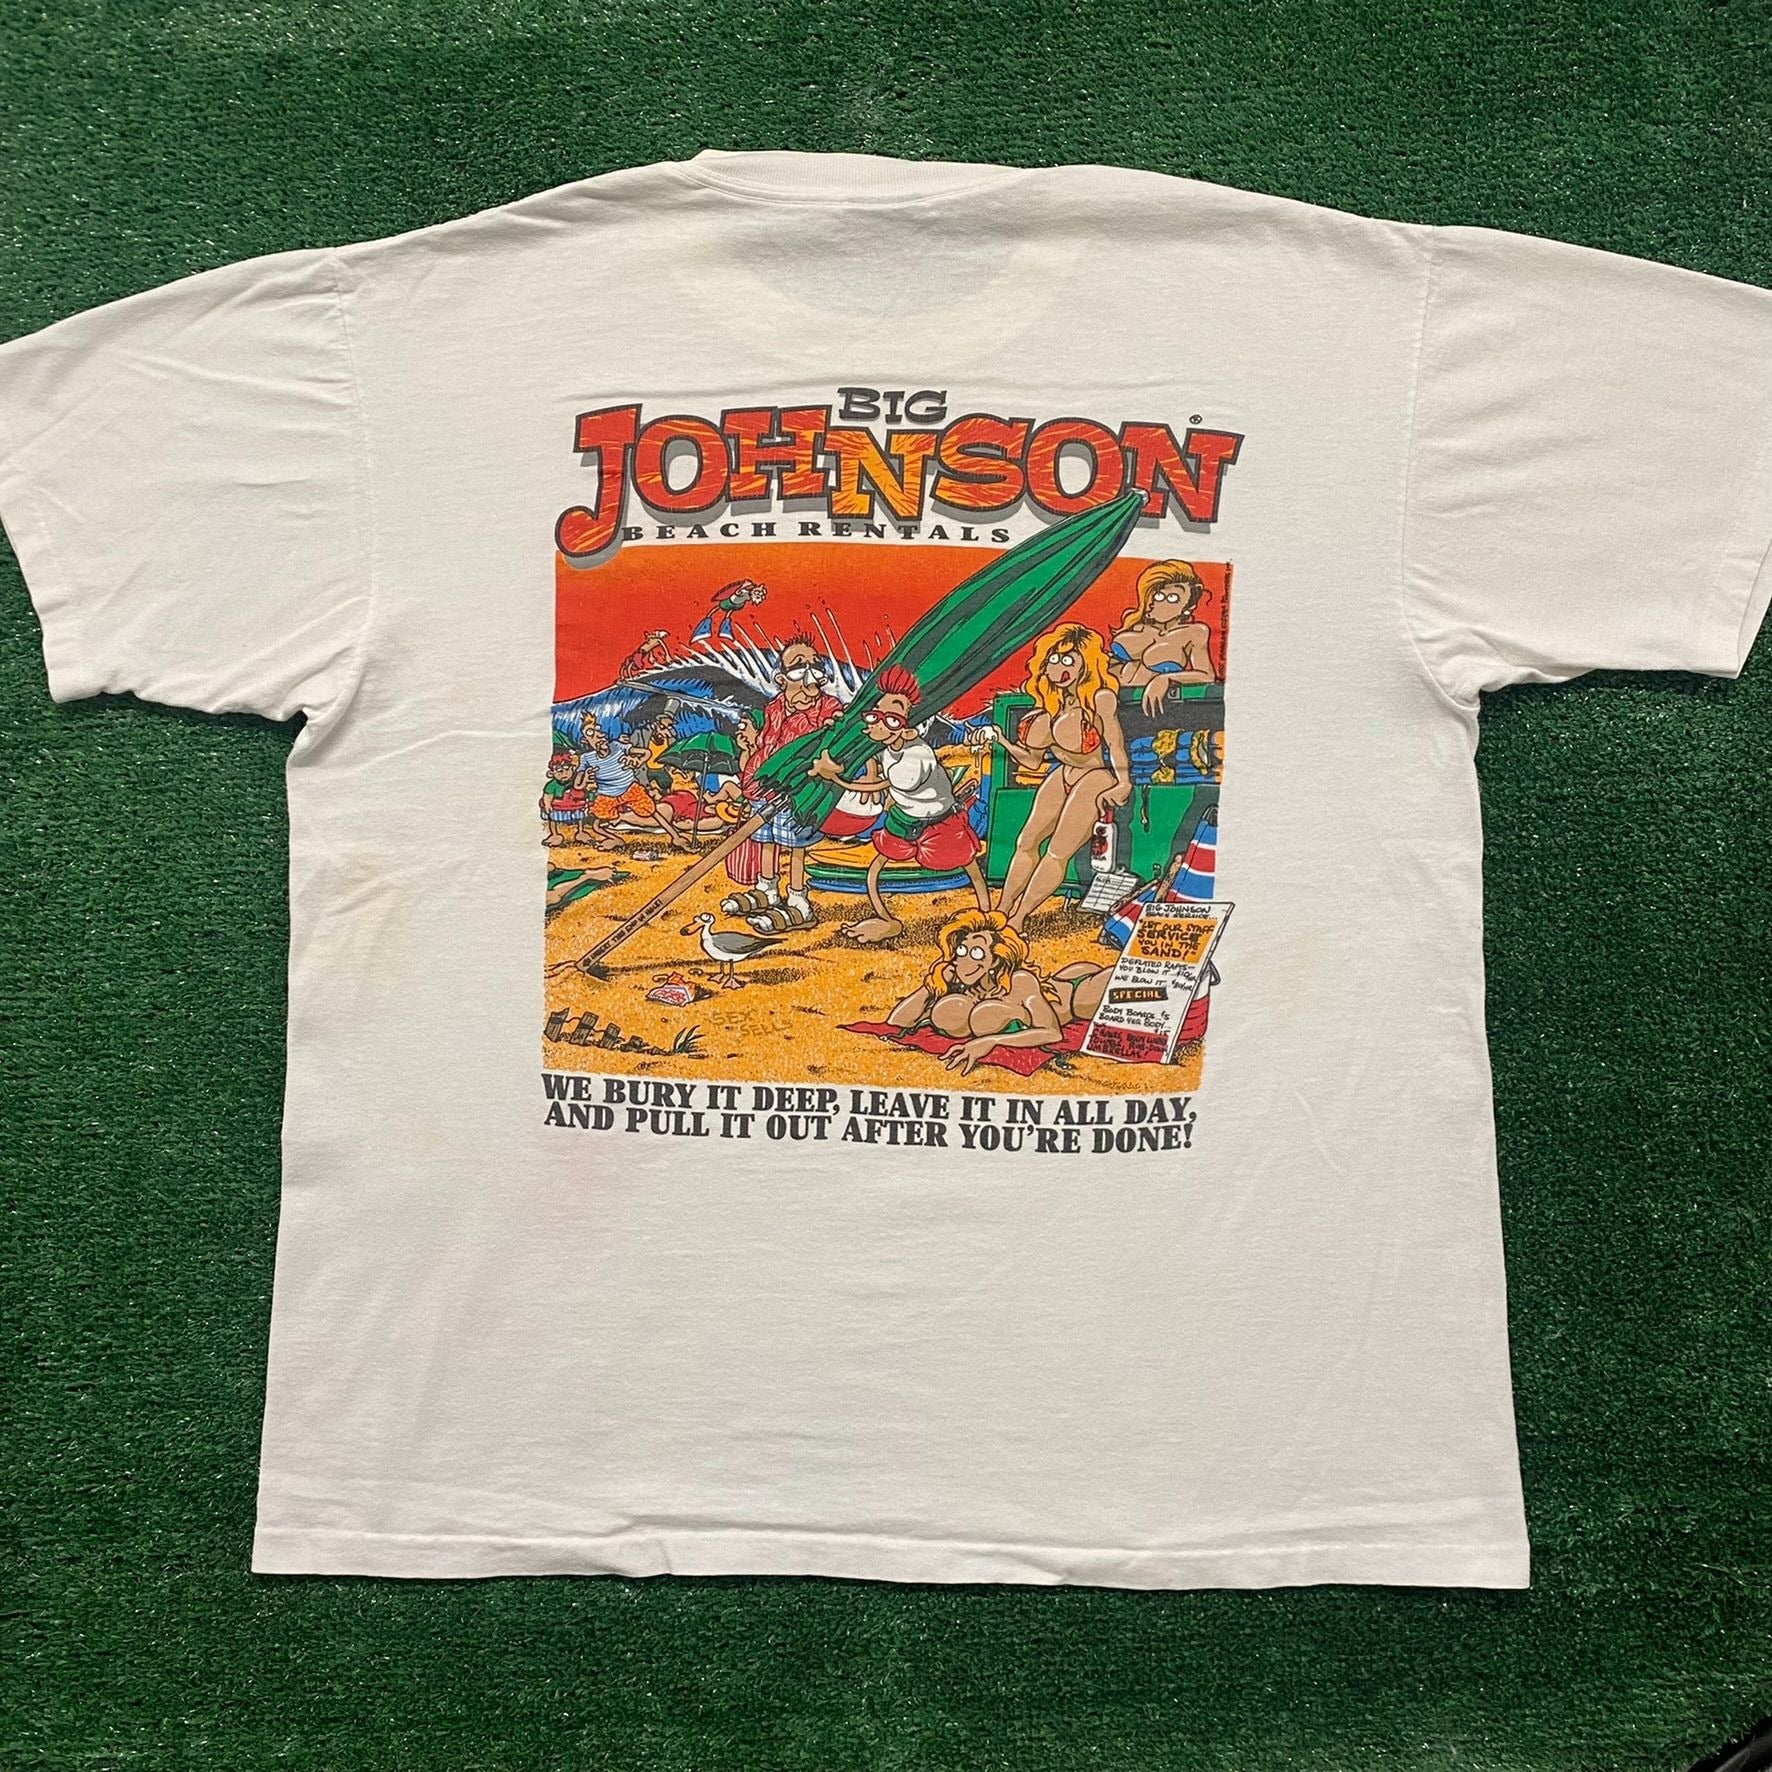 Vintage Vintage Fishing T-Shirt Large Baja Blue Sea Ocean USA 90s